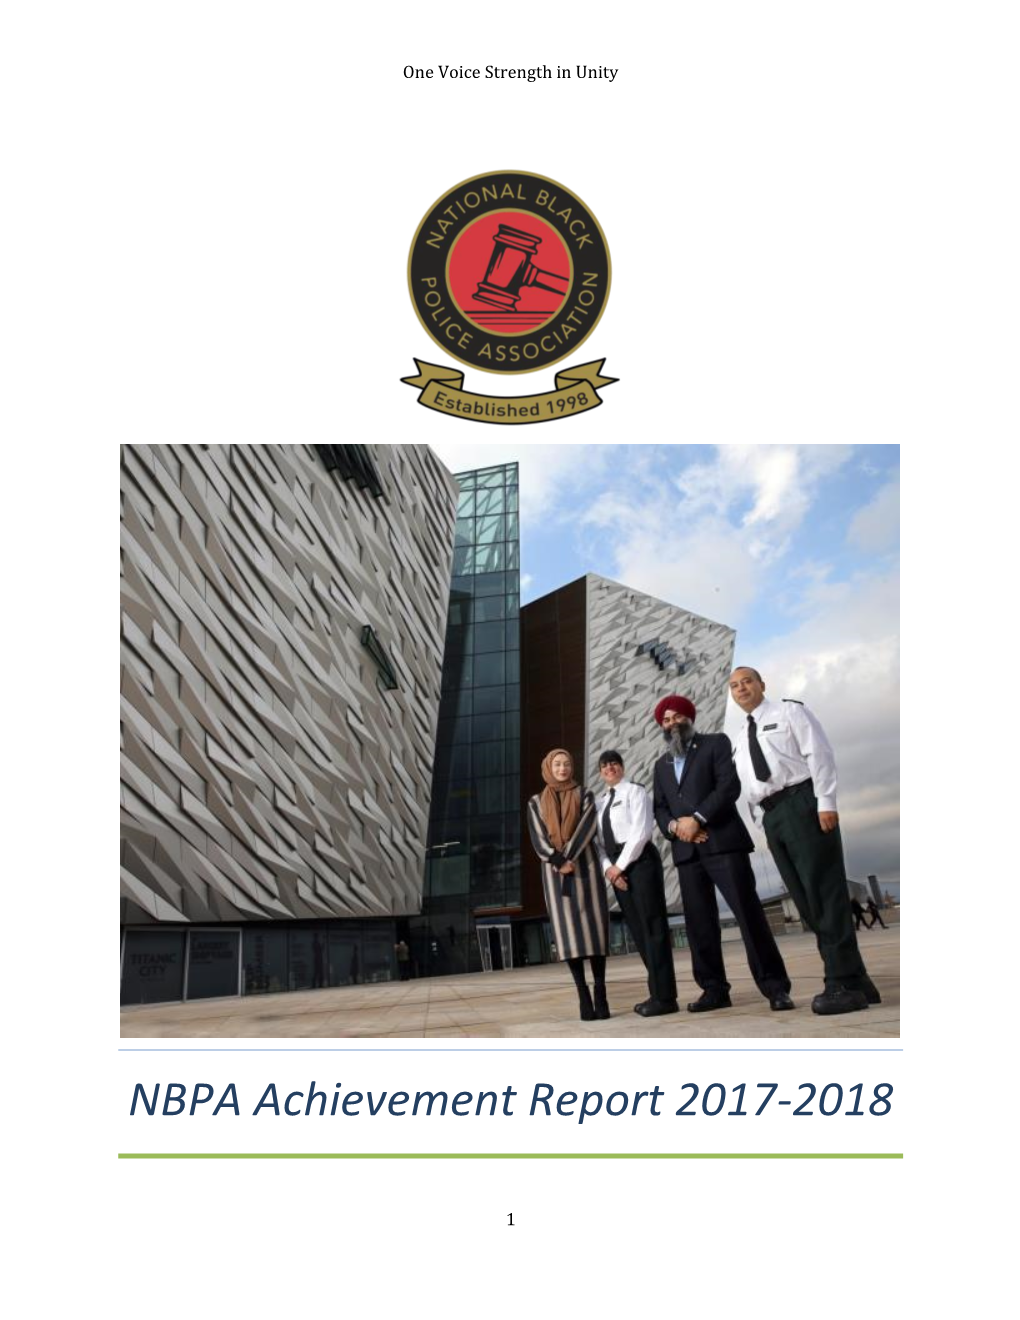 NBPA Achievement Report 2017-18